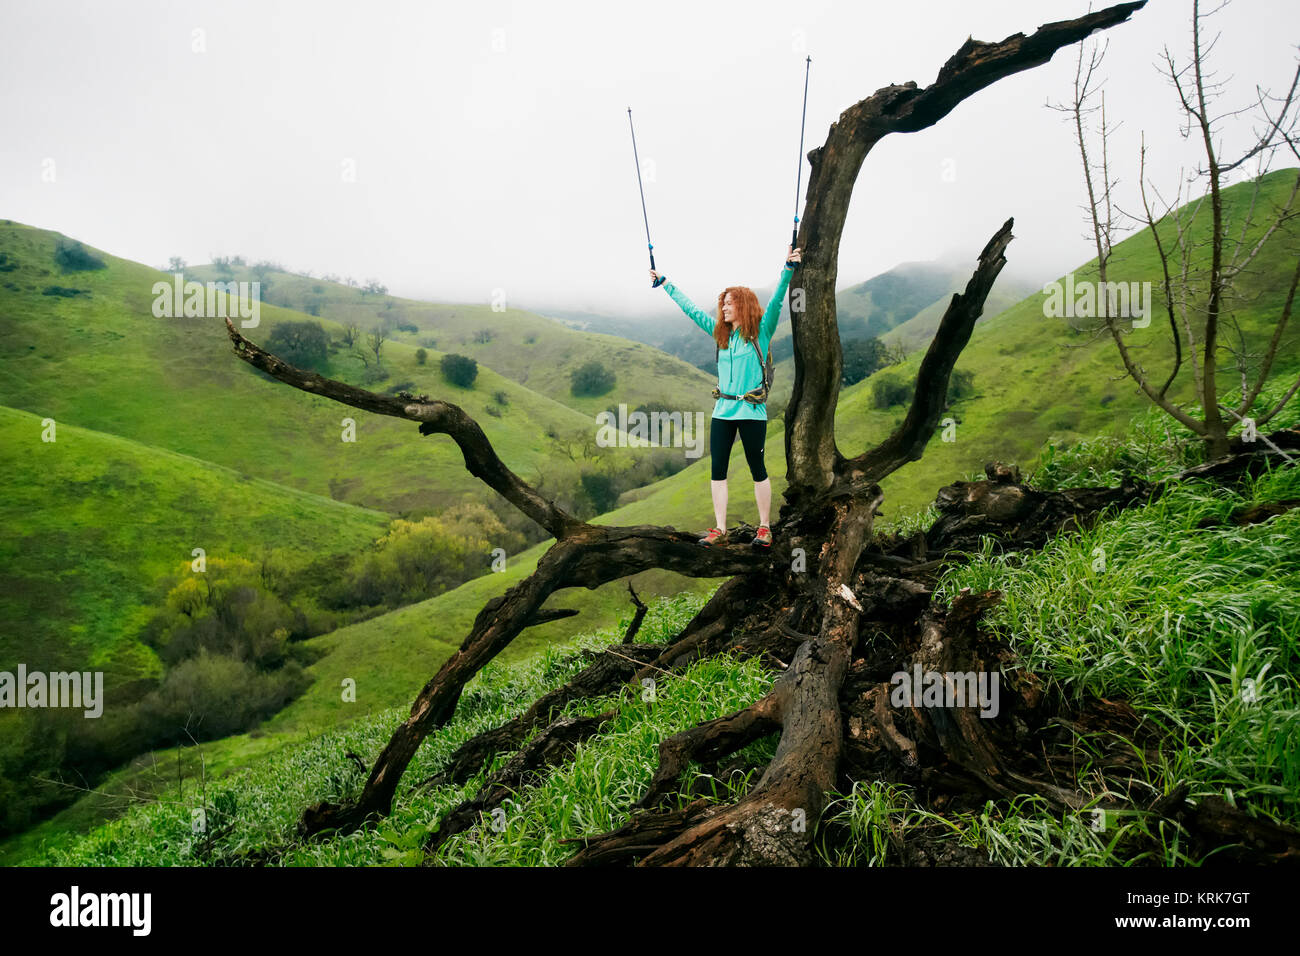 Caucasian woman standing on tree celebrating with walking sticks Stock Photo